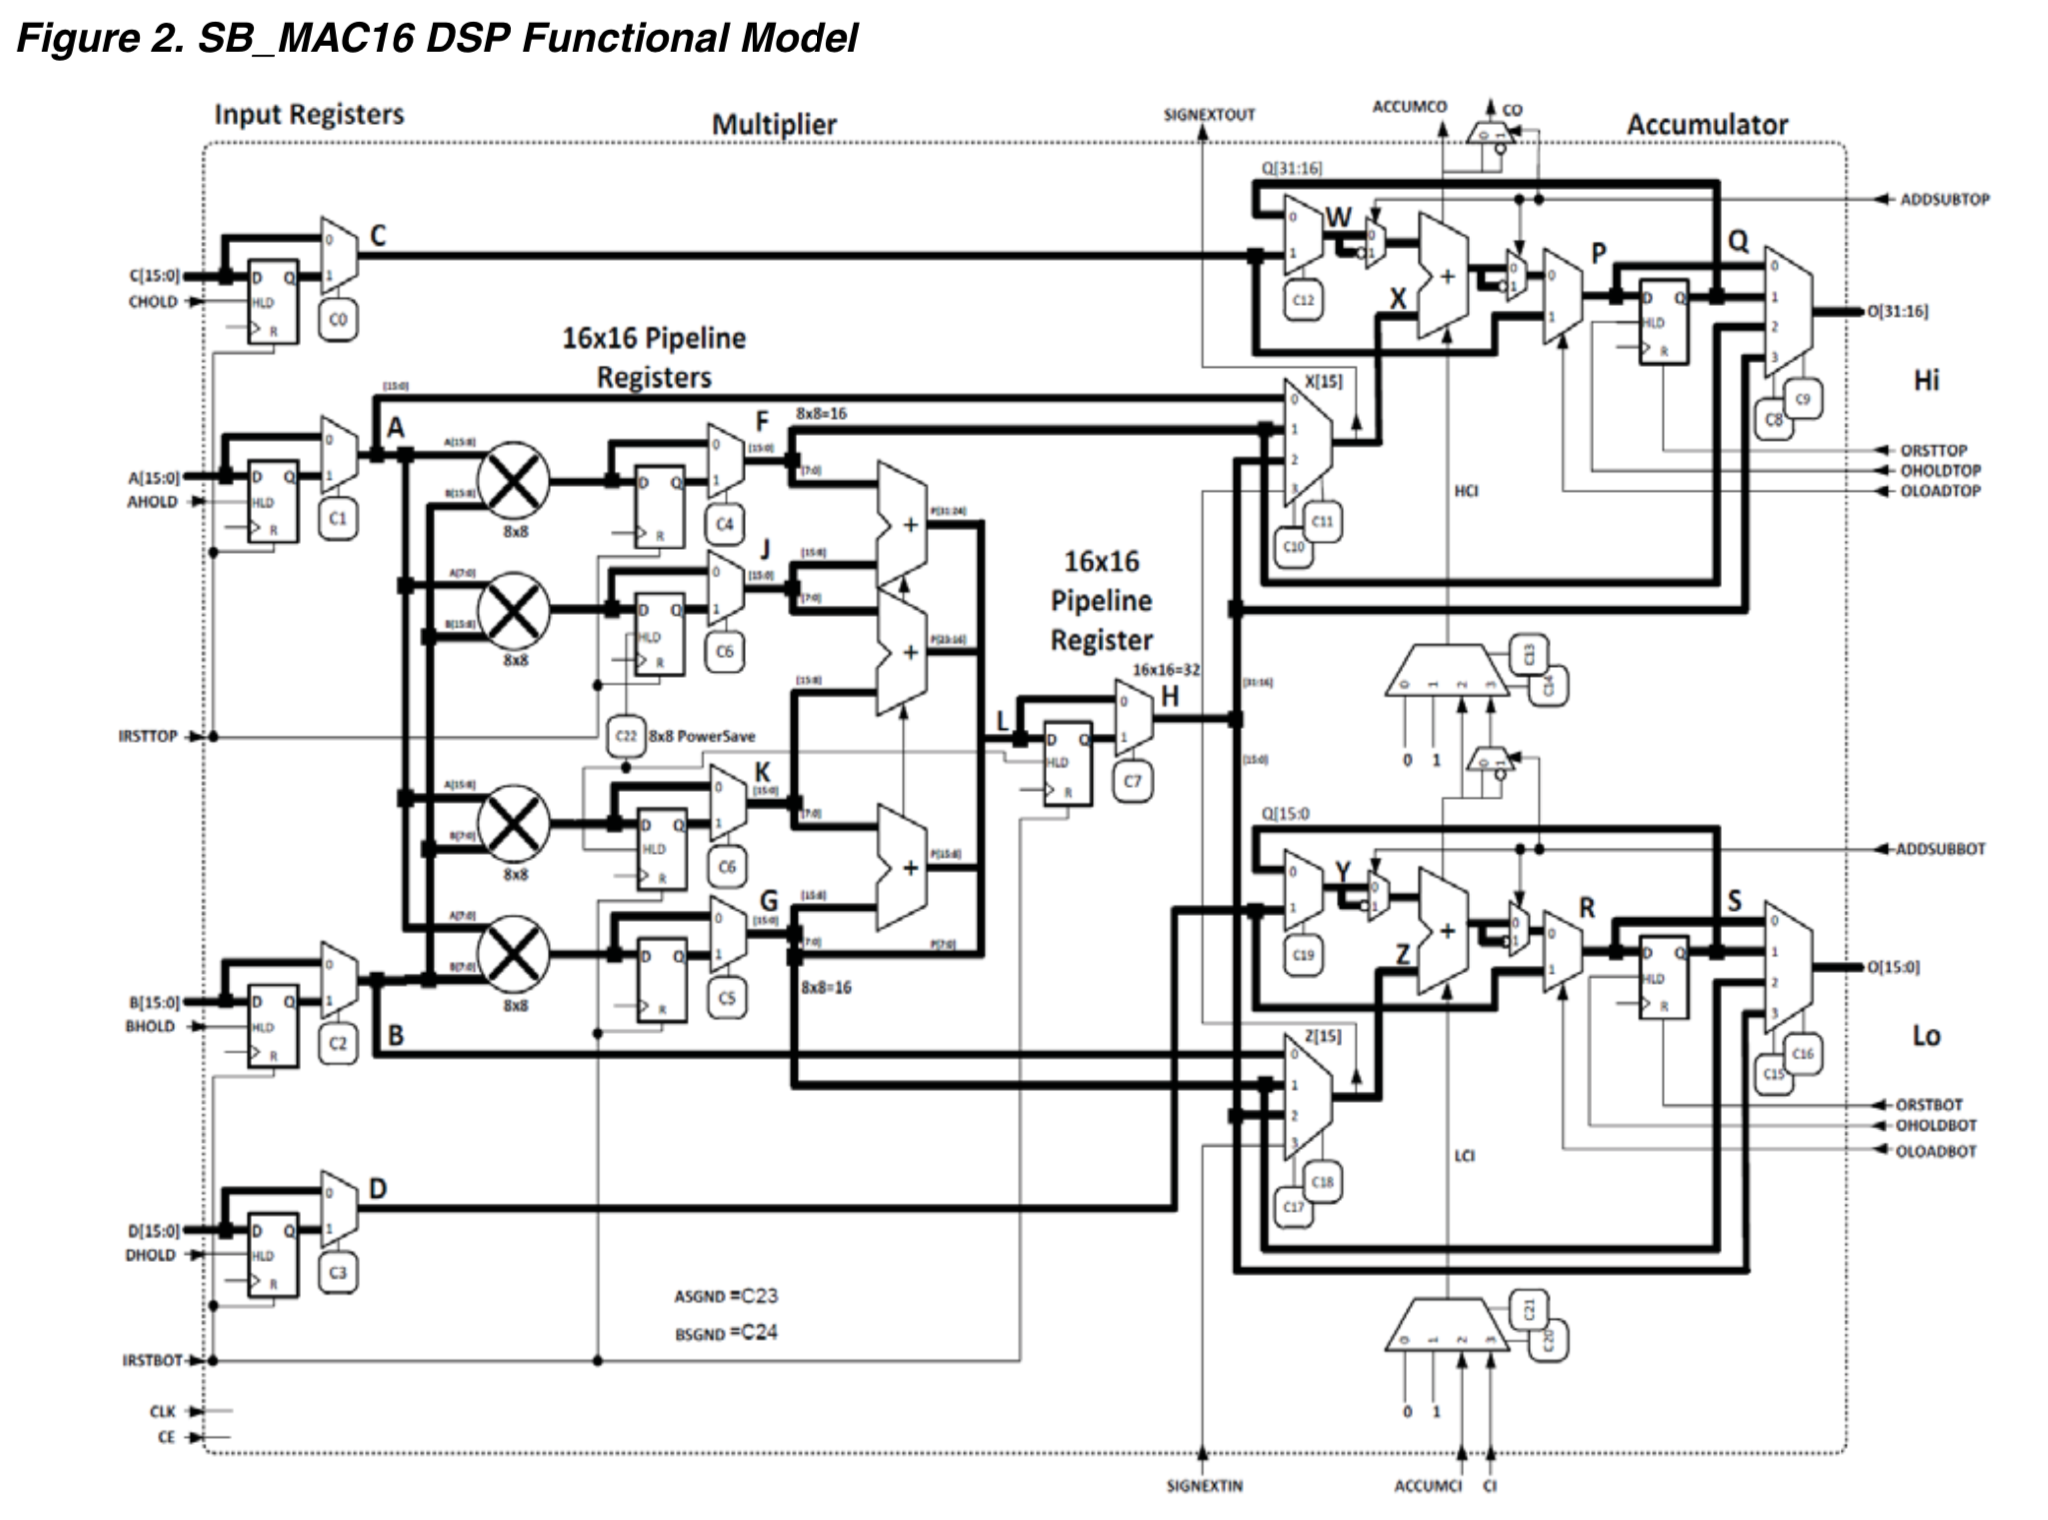 SB_MAC16 internal block diagram